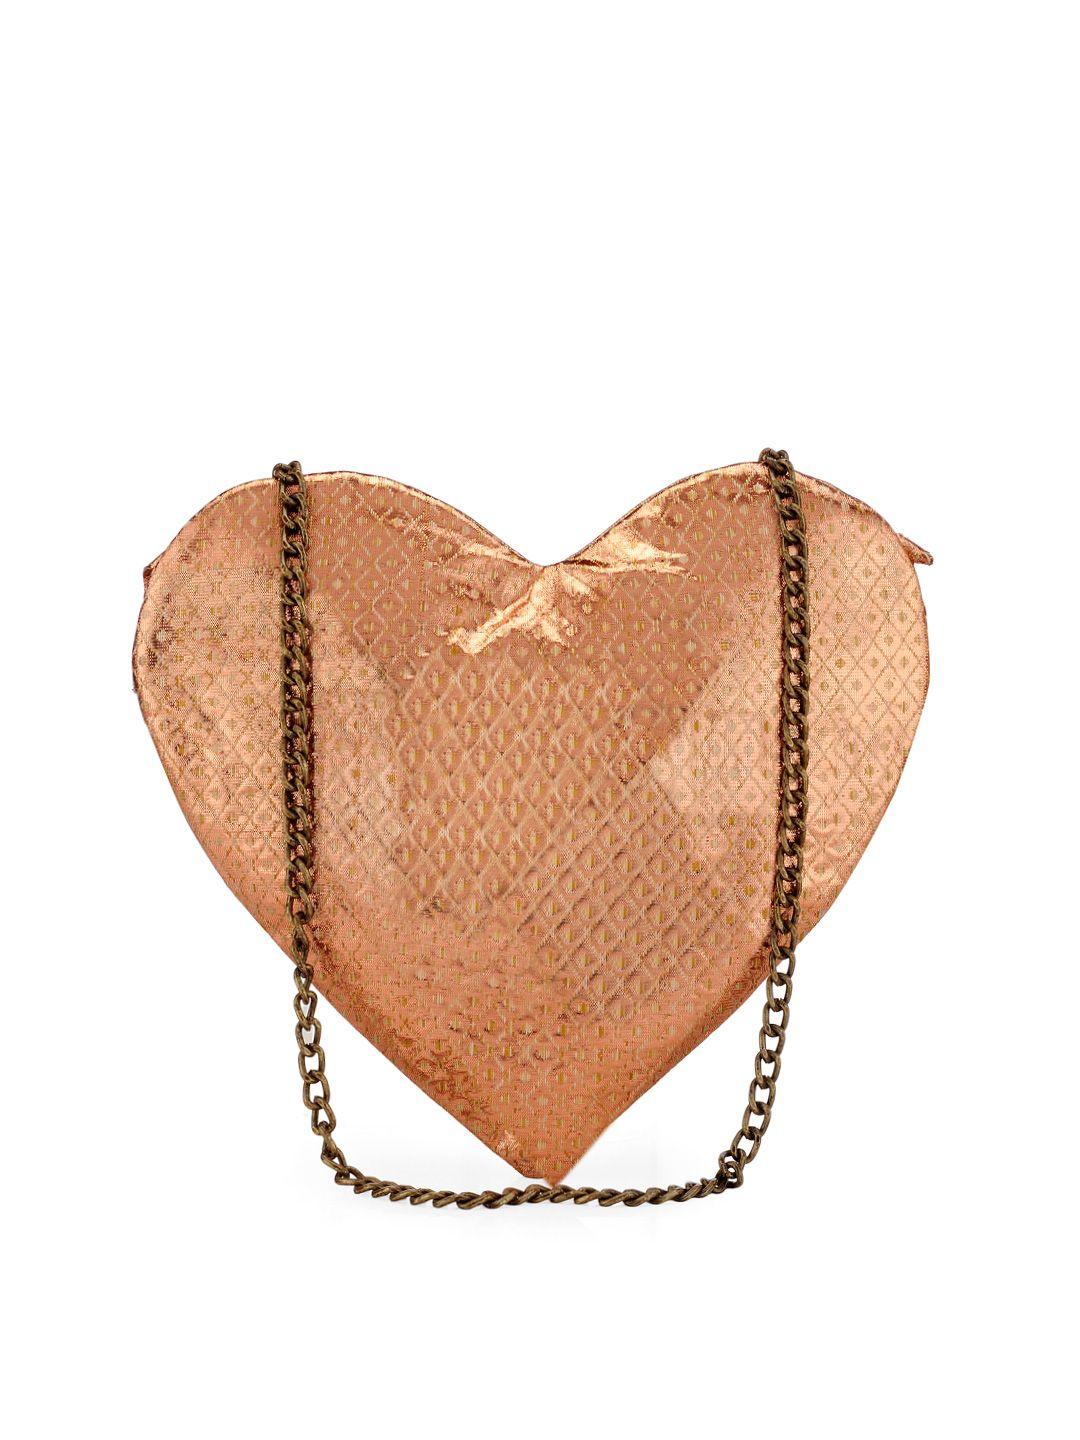 tarini nirula copper-toned heart-shaped handcrafted self-design clutch